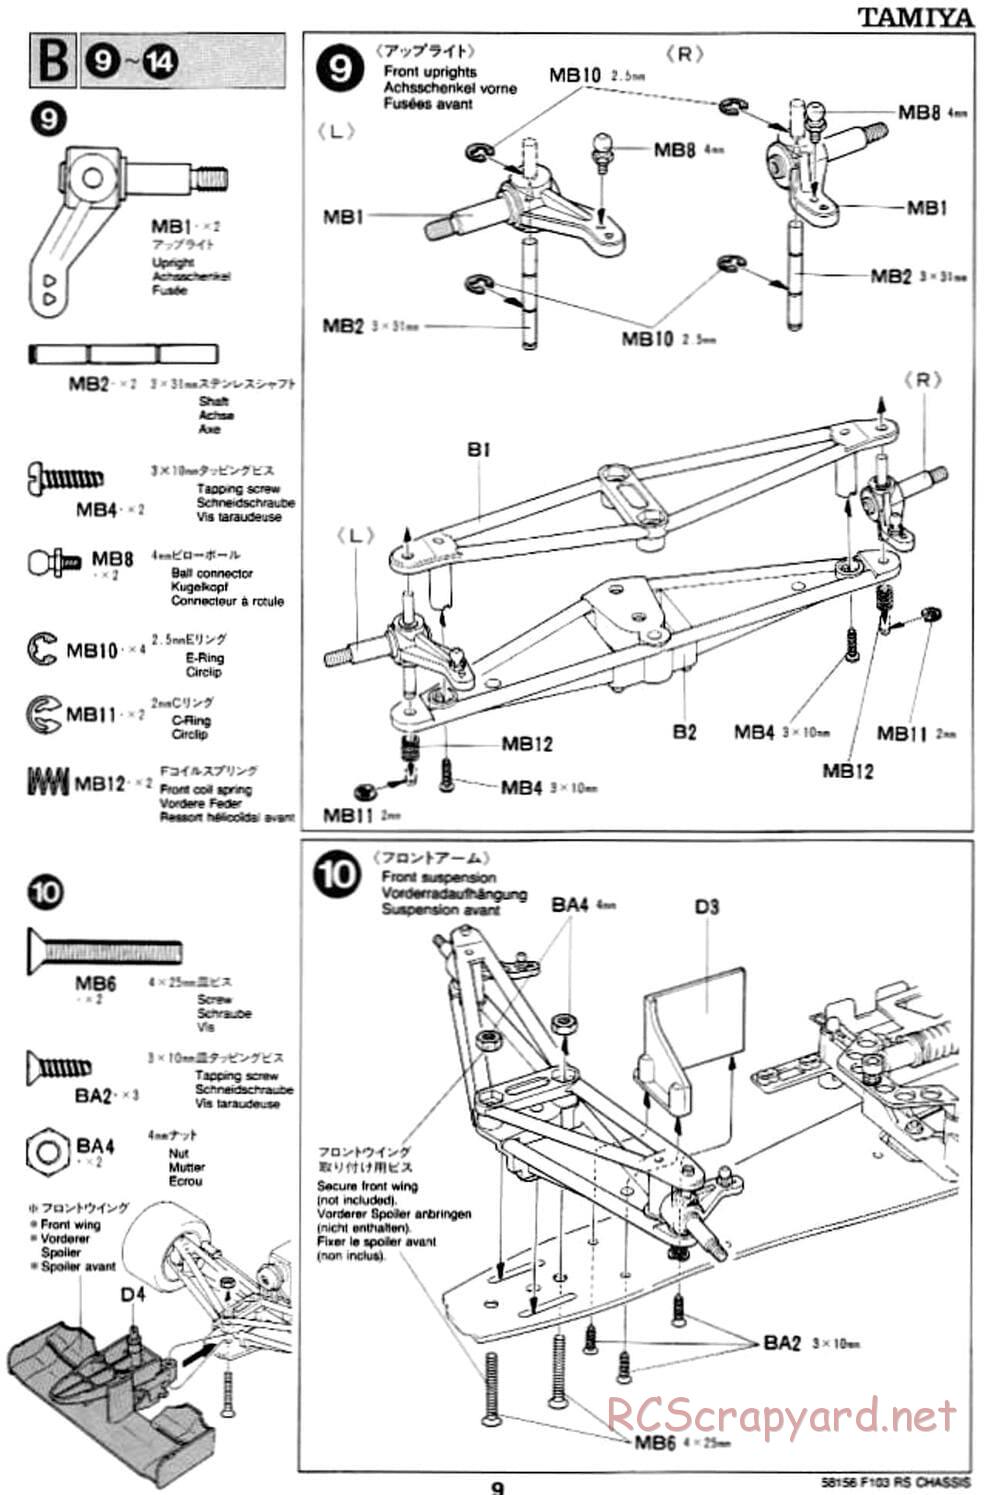 Tamiya - F103RS Chassis - Manual - Page 9